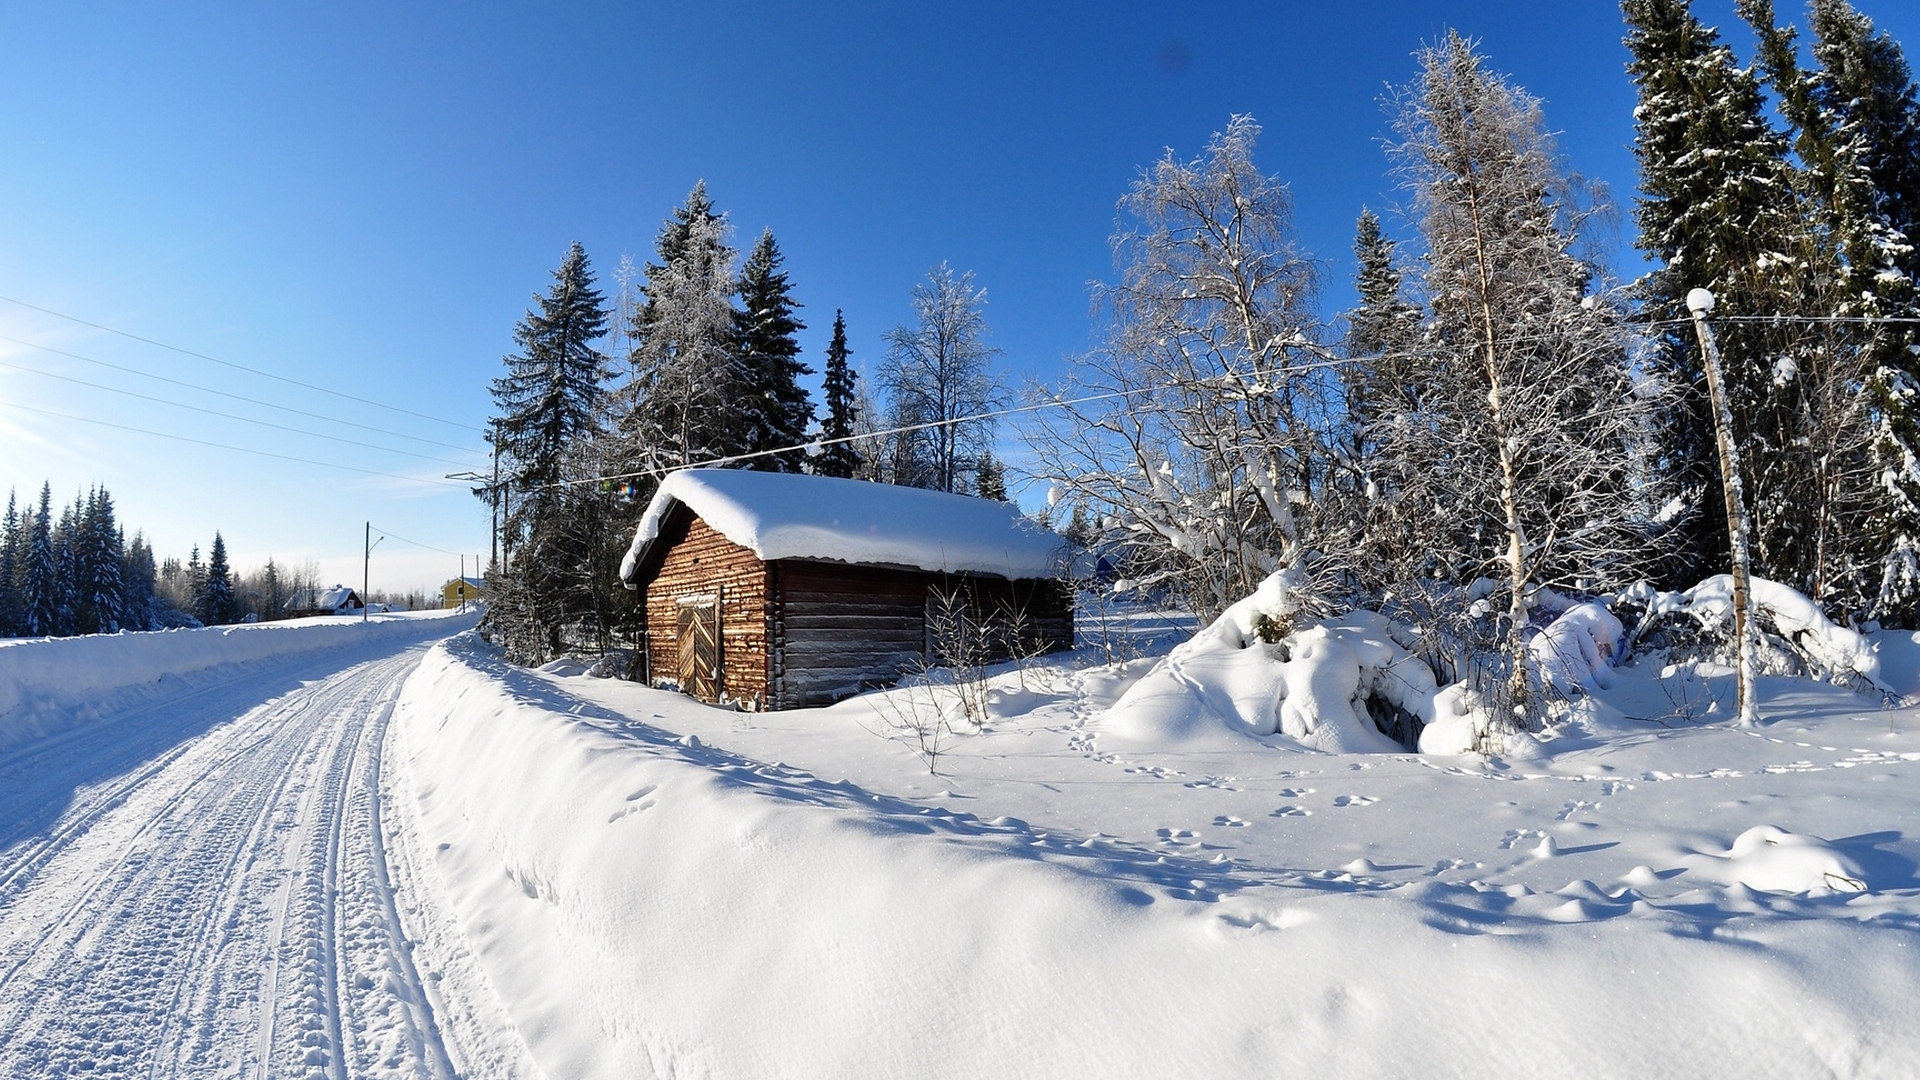 Snowy Cottage Wallpaper